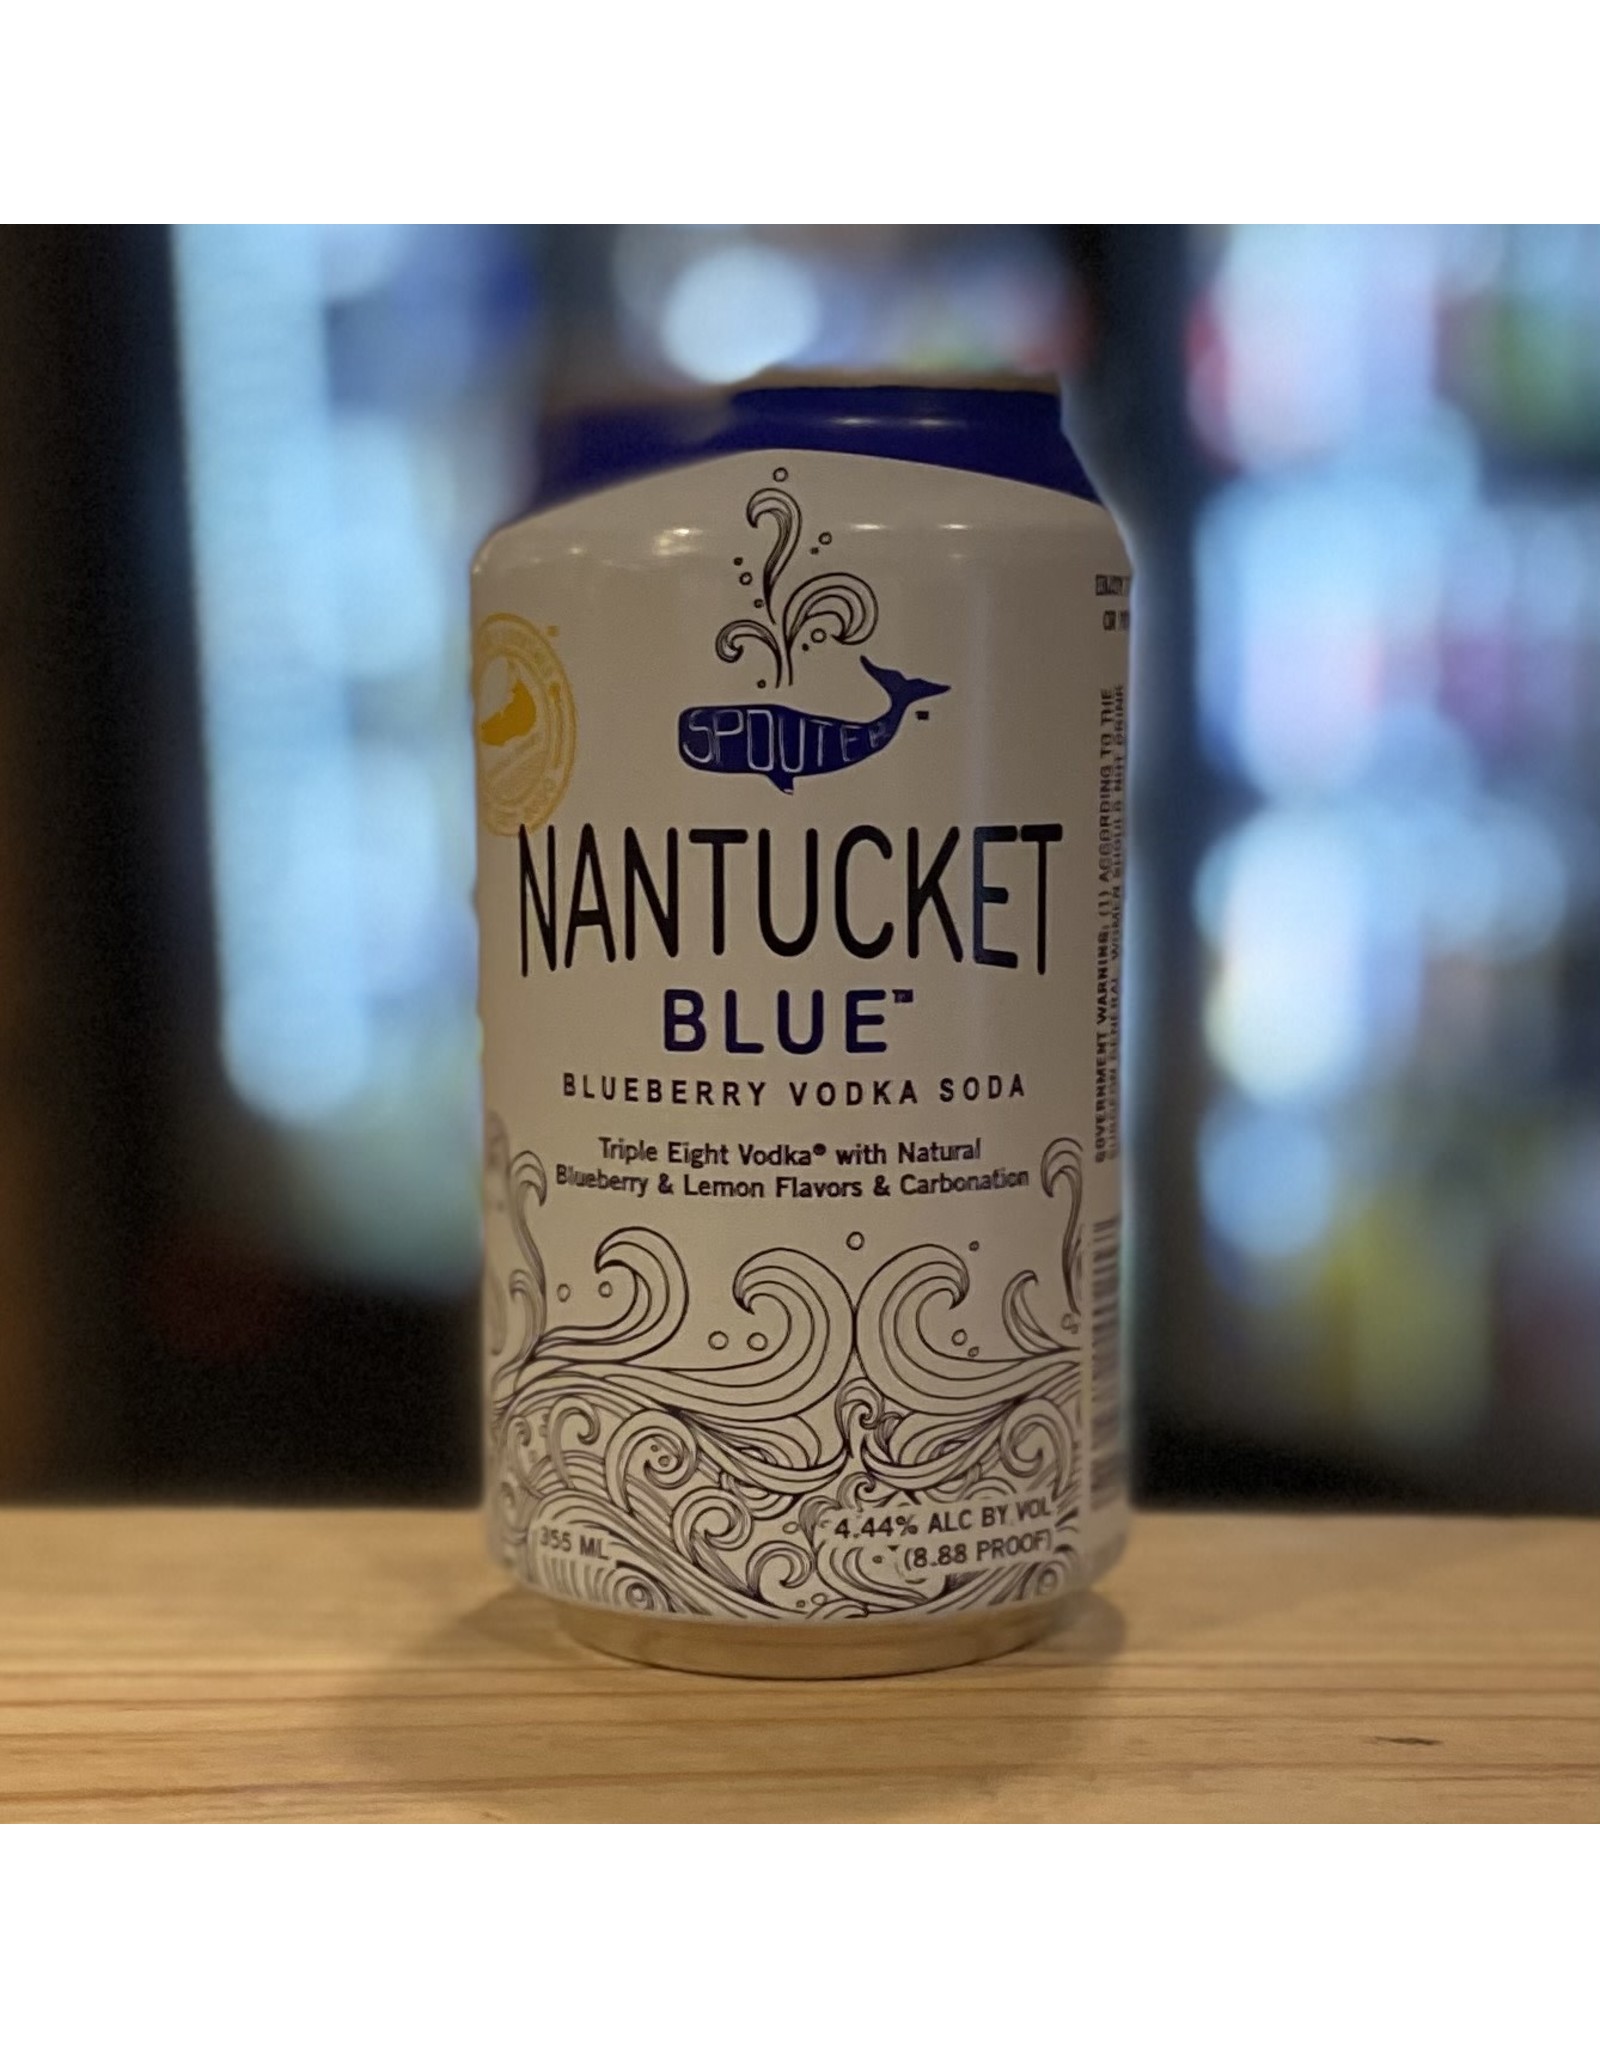 Local Triple Eight Distillery "Nantucket Blue" Blueberry Vodka Soda - Nantucket, MA